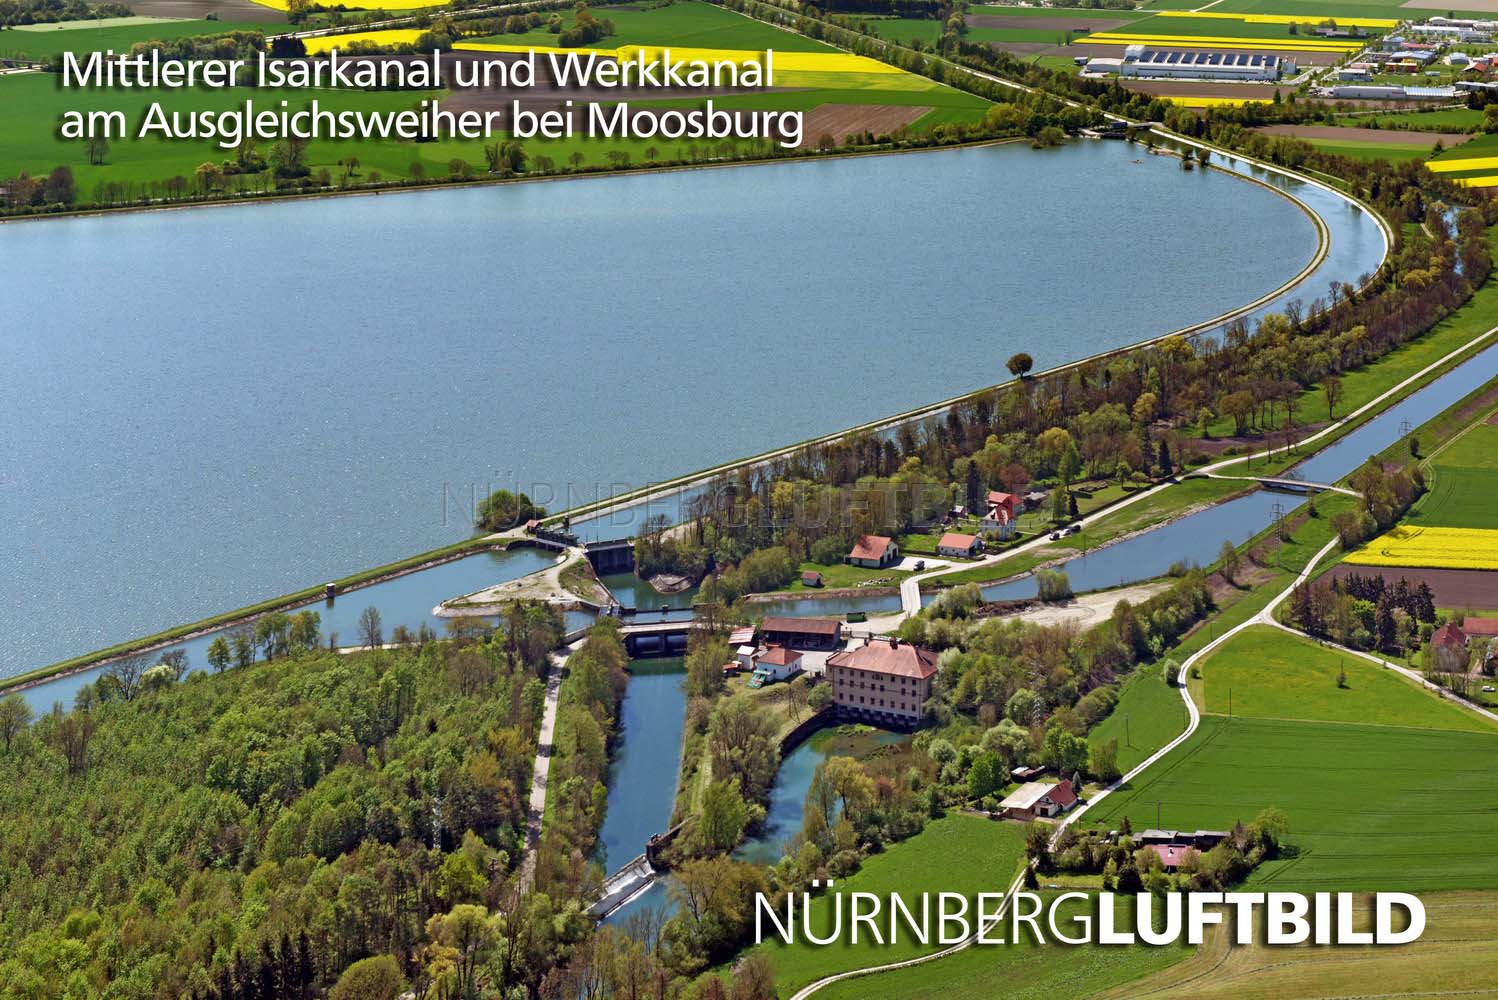 Mittlerer Isarkanal und Werkkanal bei Moosburg, Luftbild